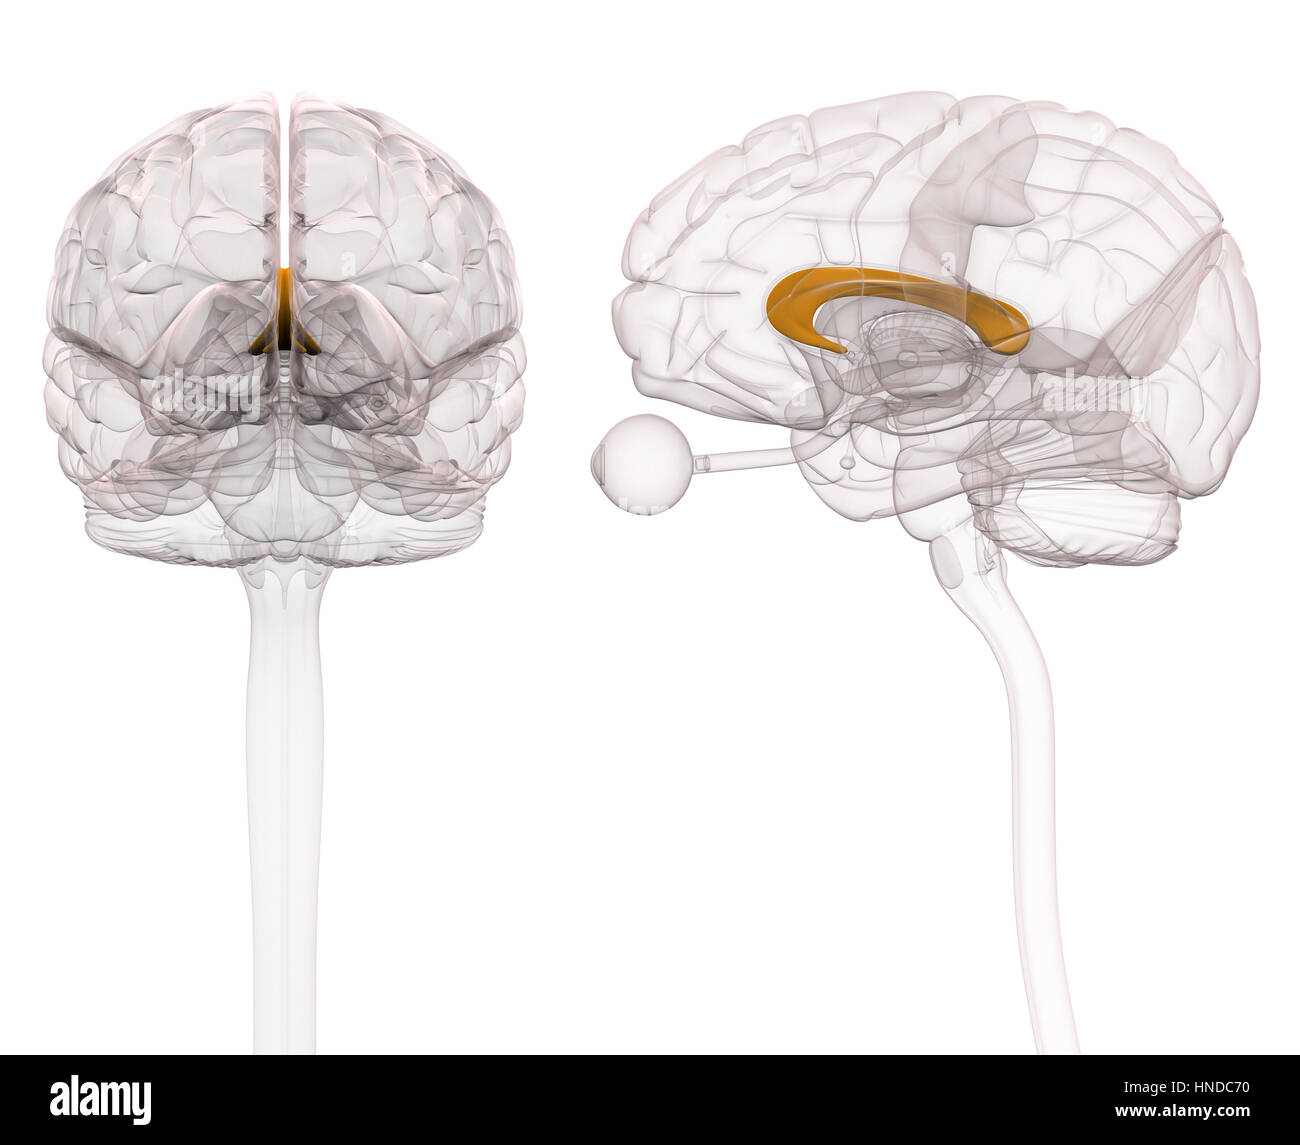 Corpus Callosum Brain Anatomy - 3d illustration Stock Photo